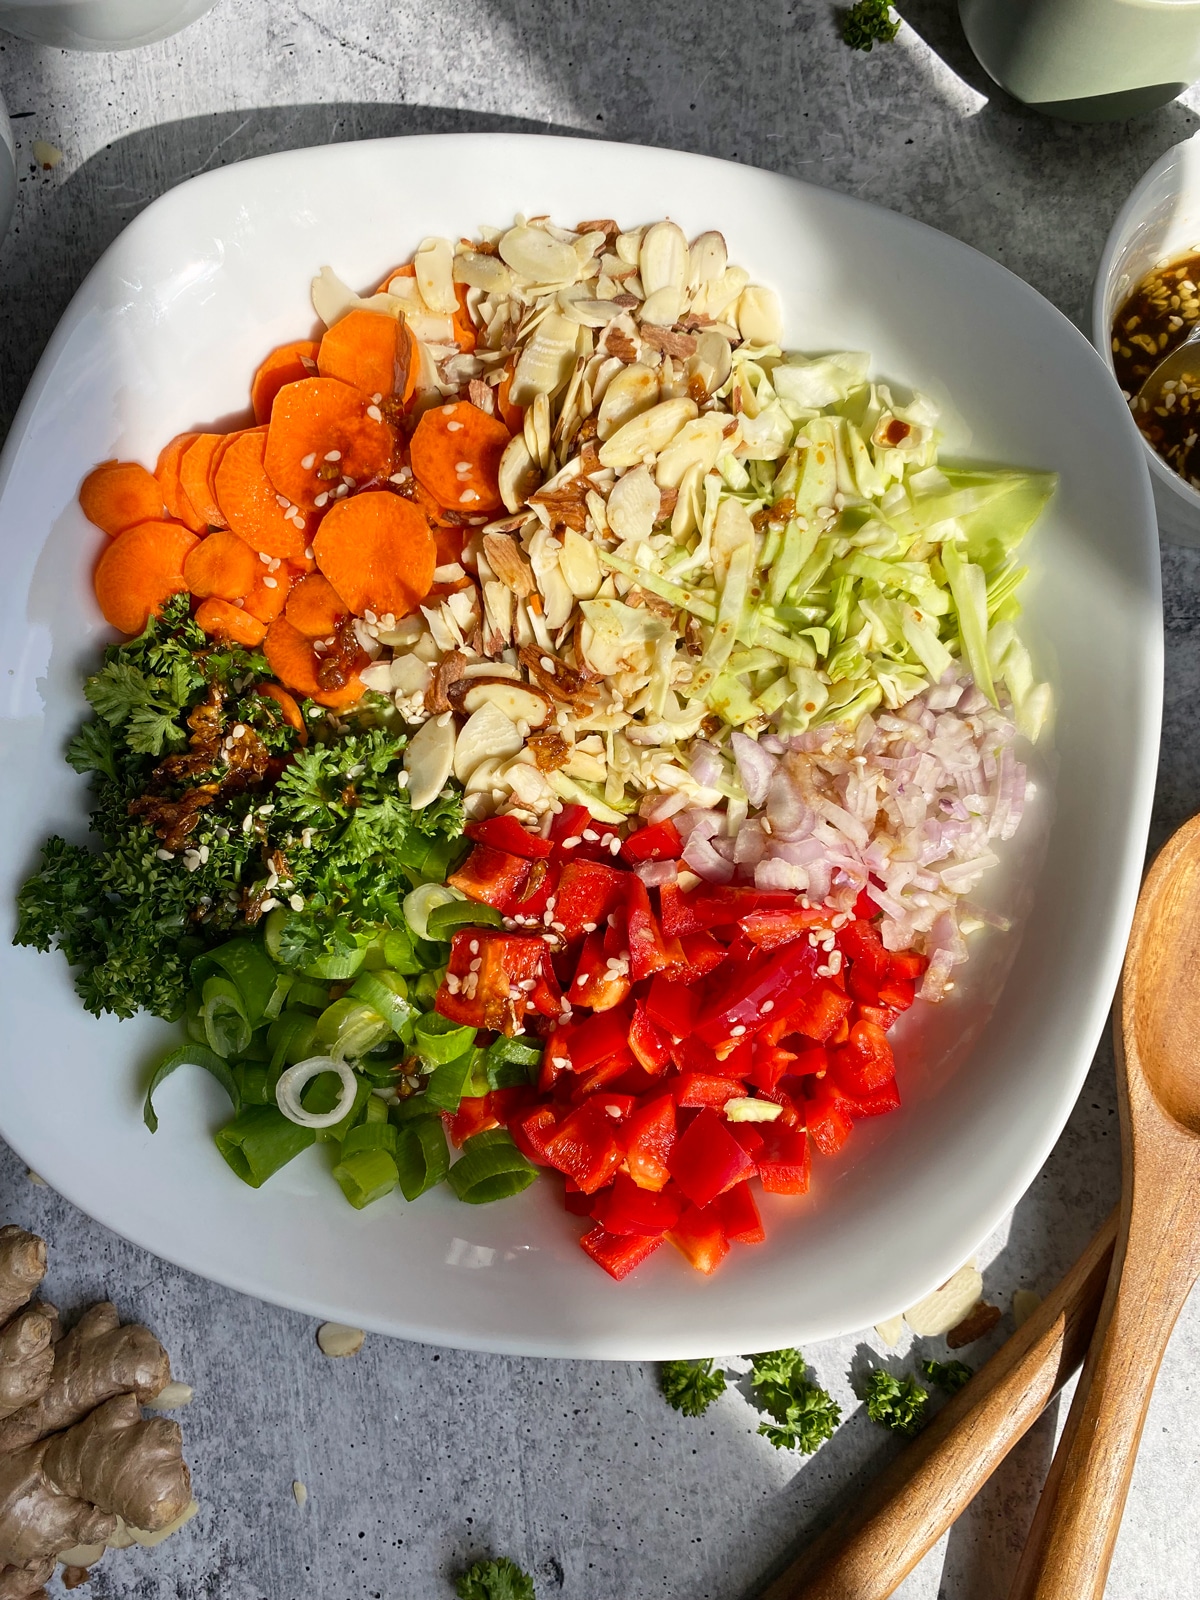 Asian salad ingredients in bowl